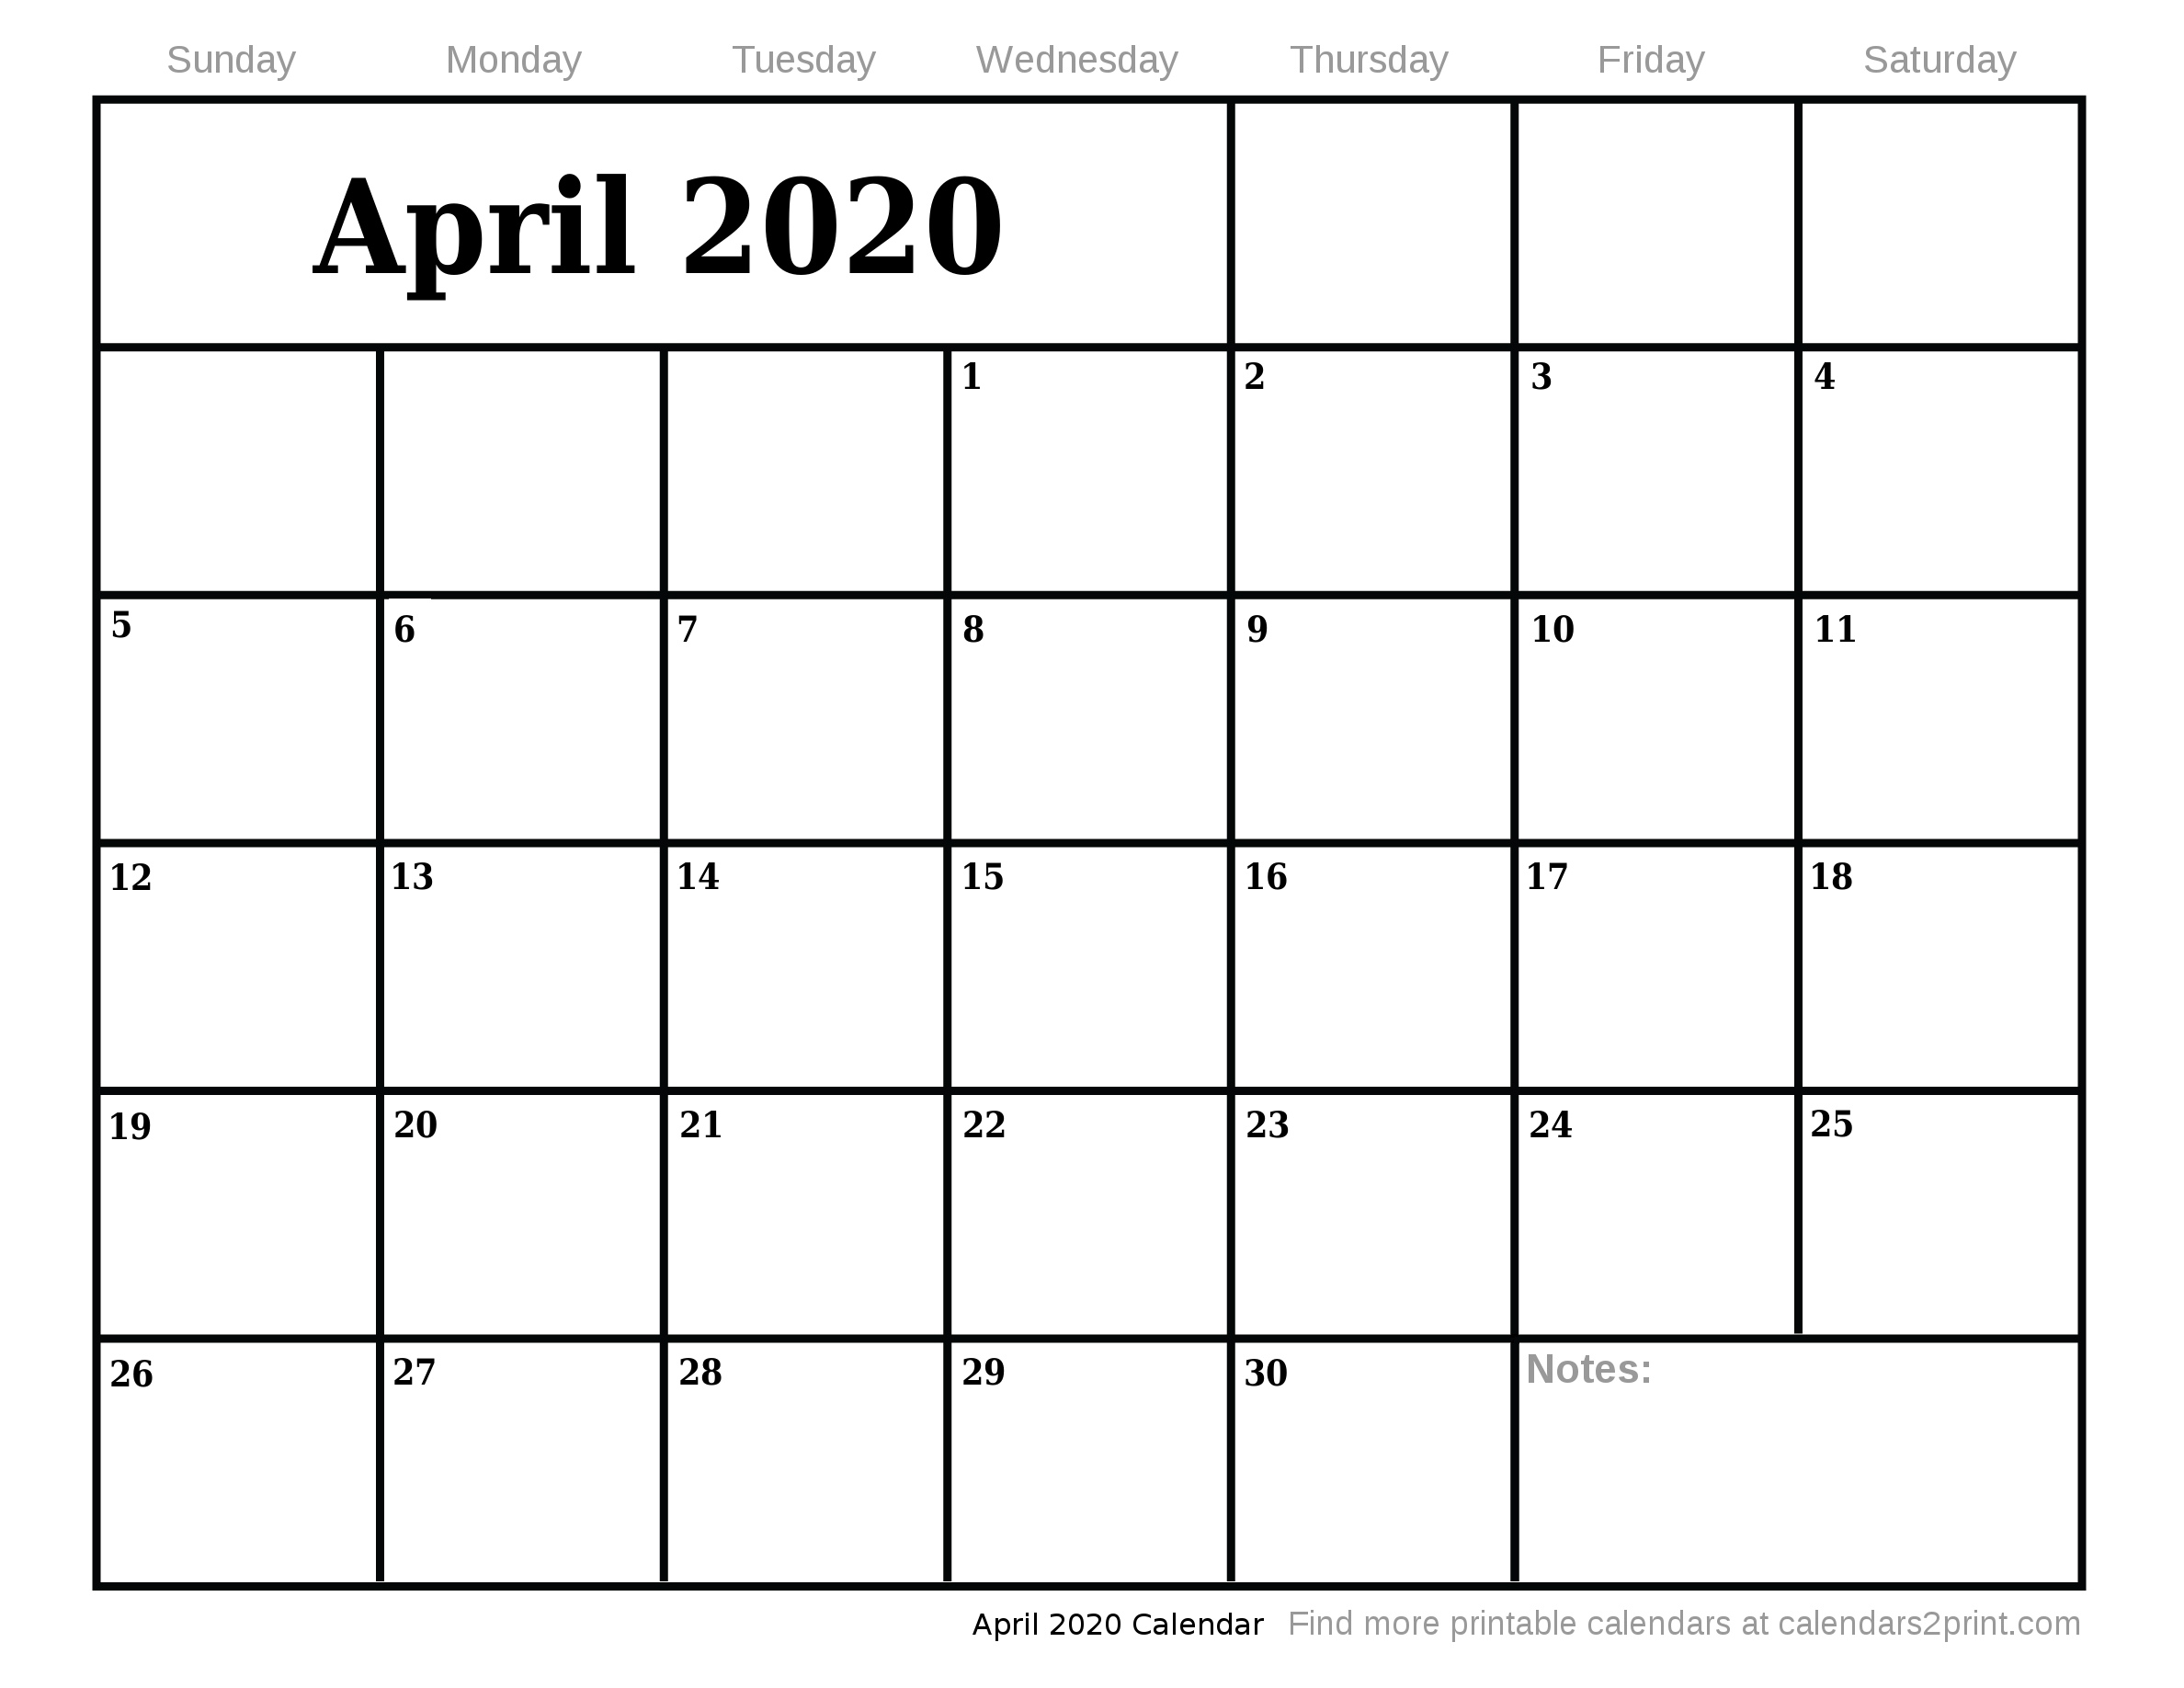 Apr 2020 Printable Calendar